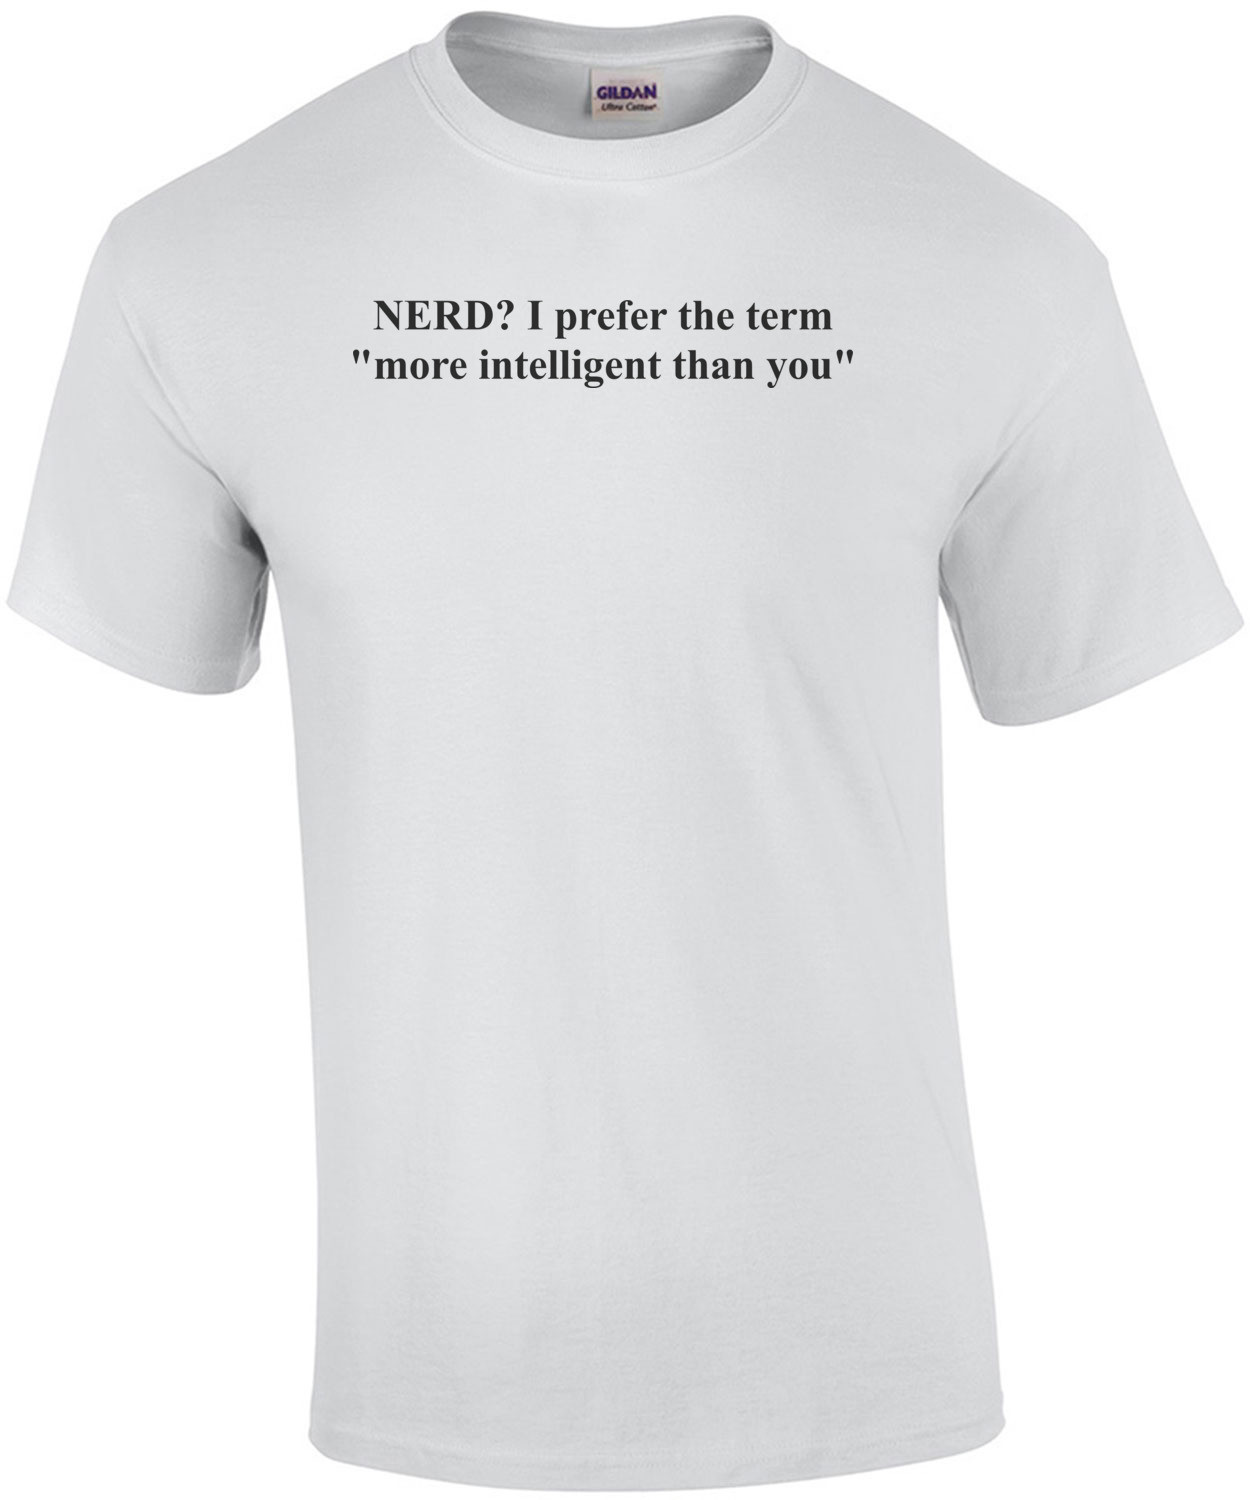 NERD? I prefer the term "more intelligent than you" Funny Nerd T-Shirt Shirt